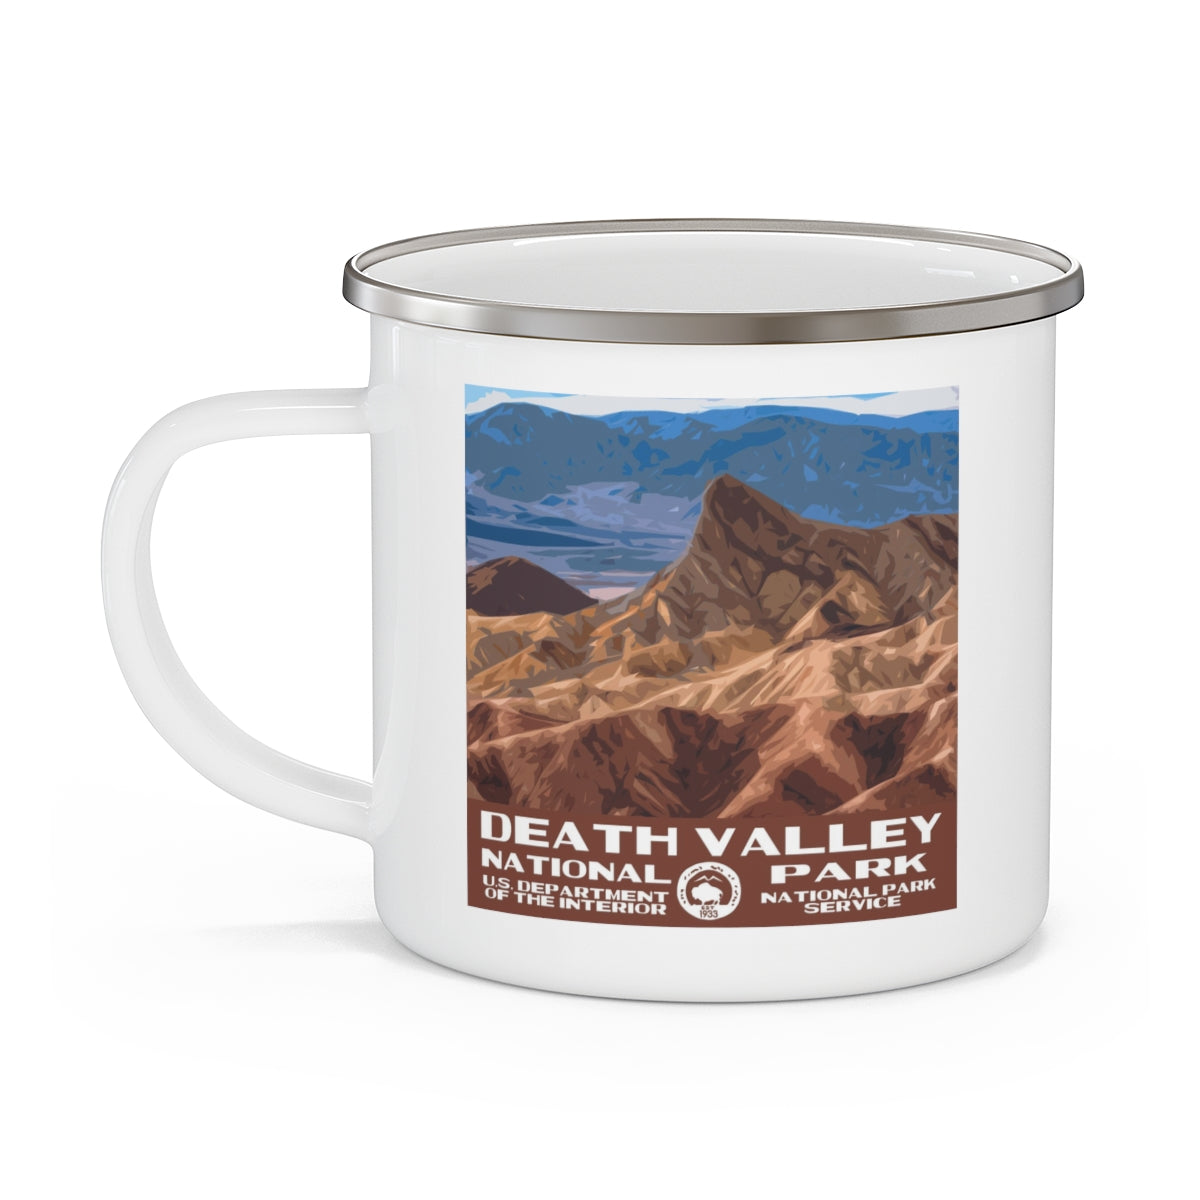 Death Valley National Park Enamel Camping Mug - Zabriskie Point